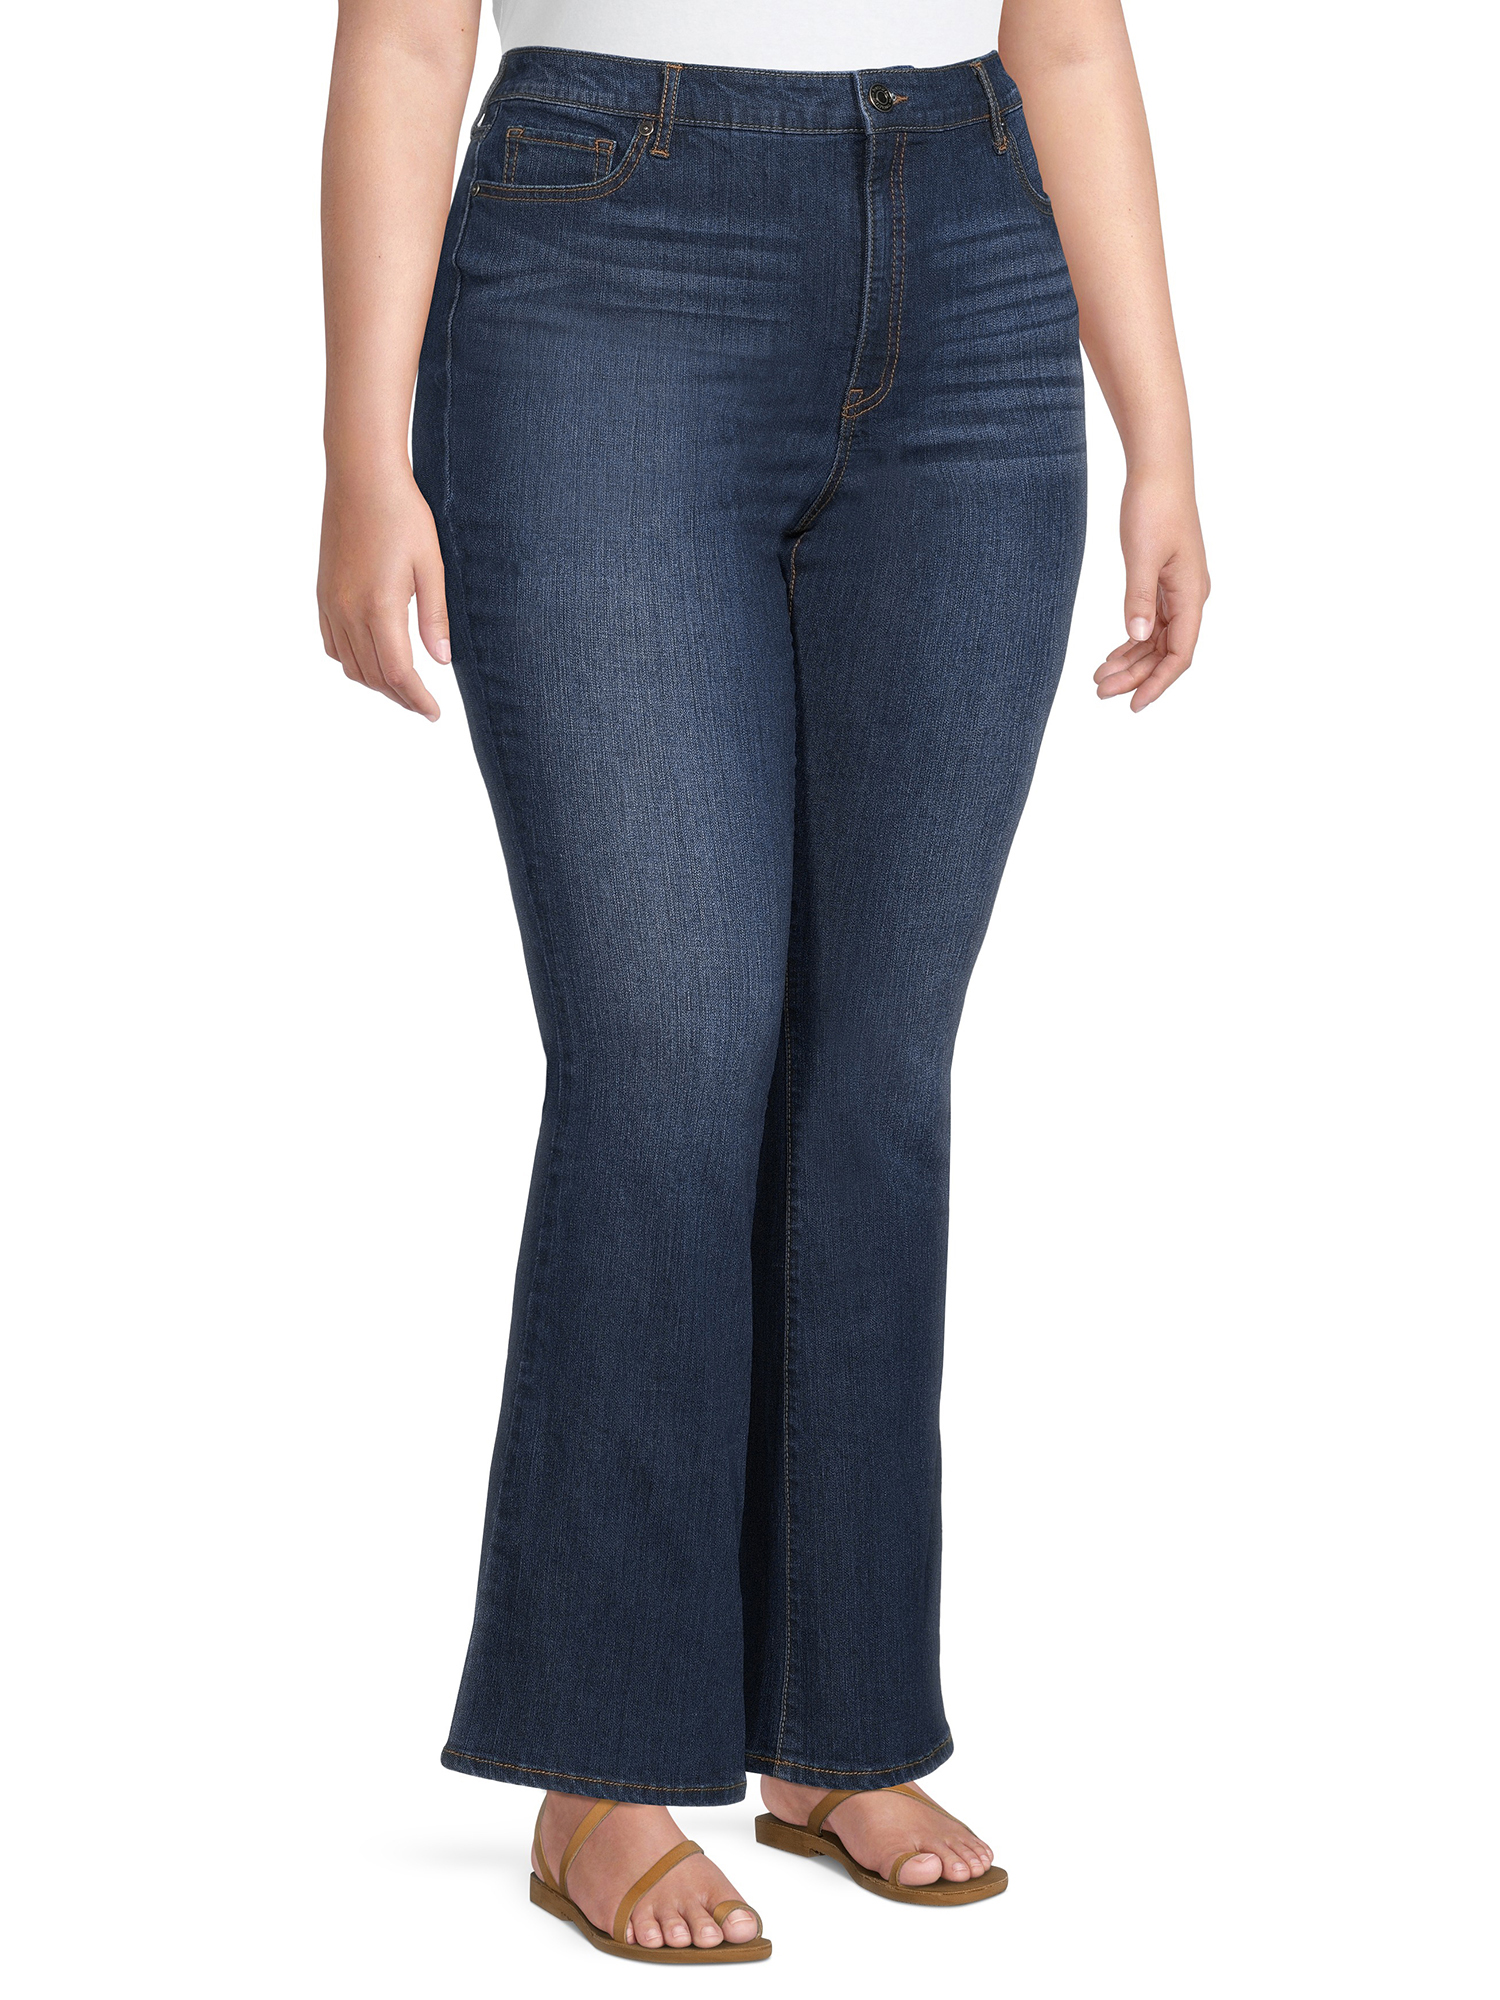 Terra & Sky Women's Plus Size Bootcut Jeans - image 2 of 6